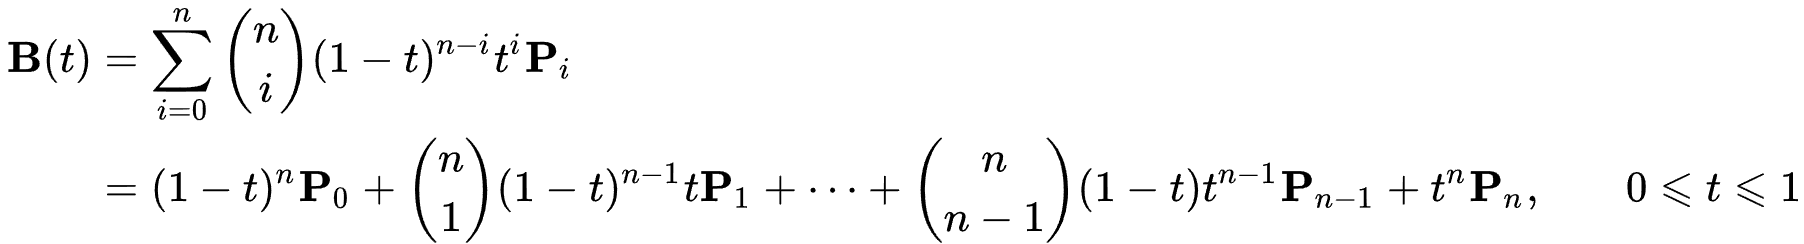 Bezier curve mathematical equation